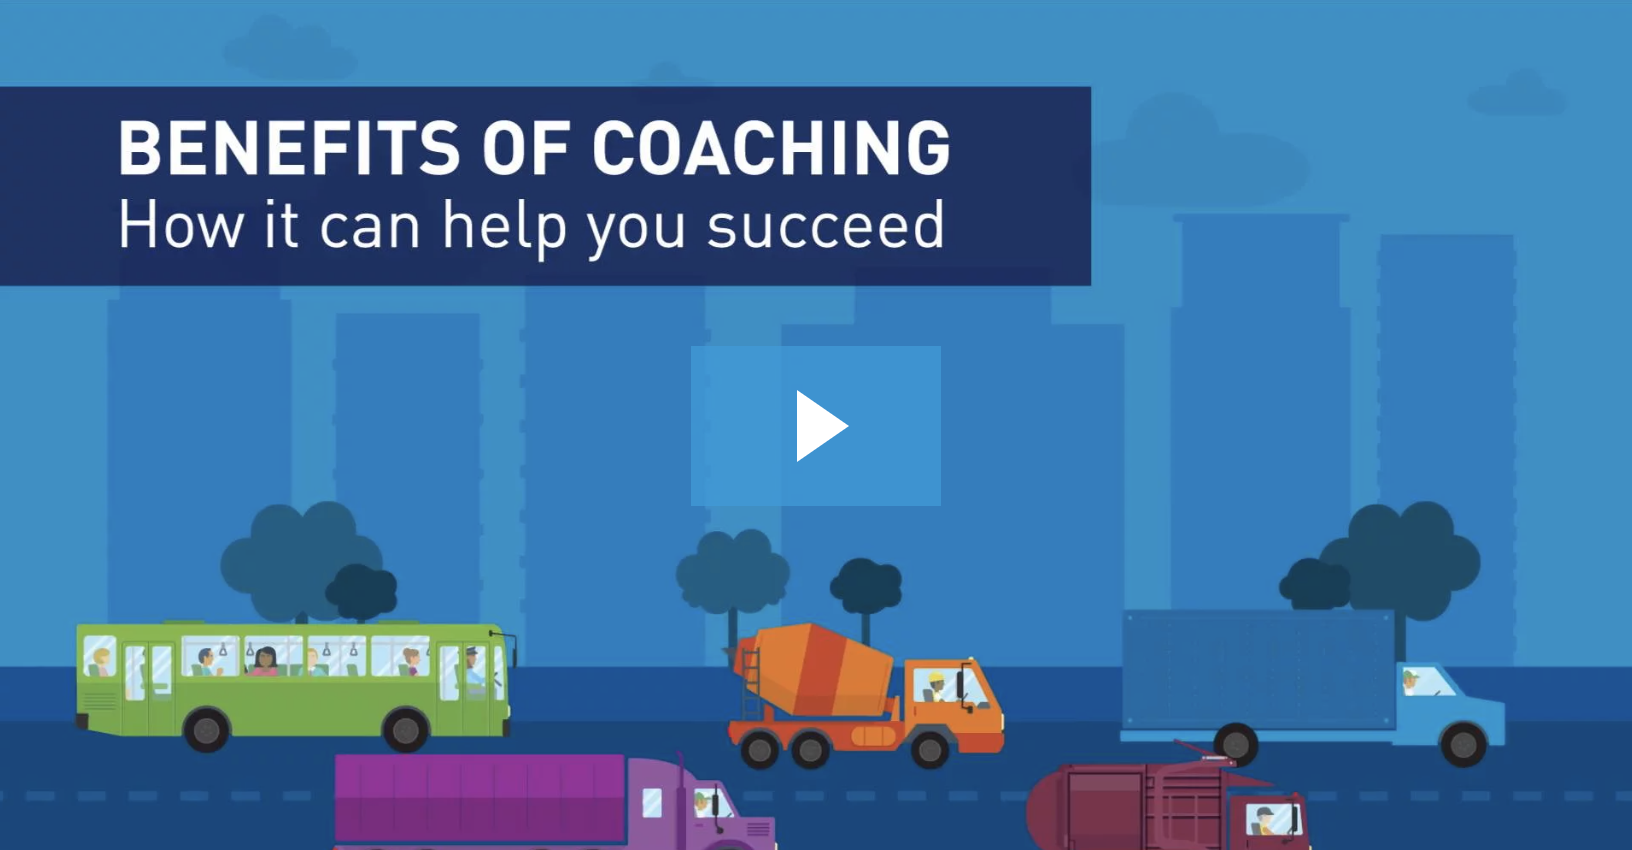 Video Benefits of Coaching